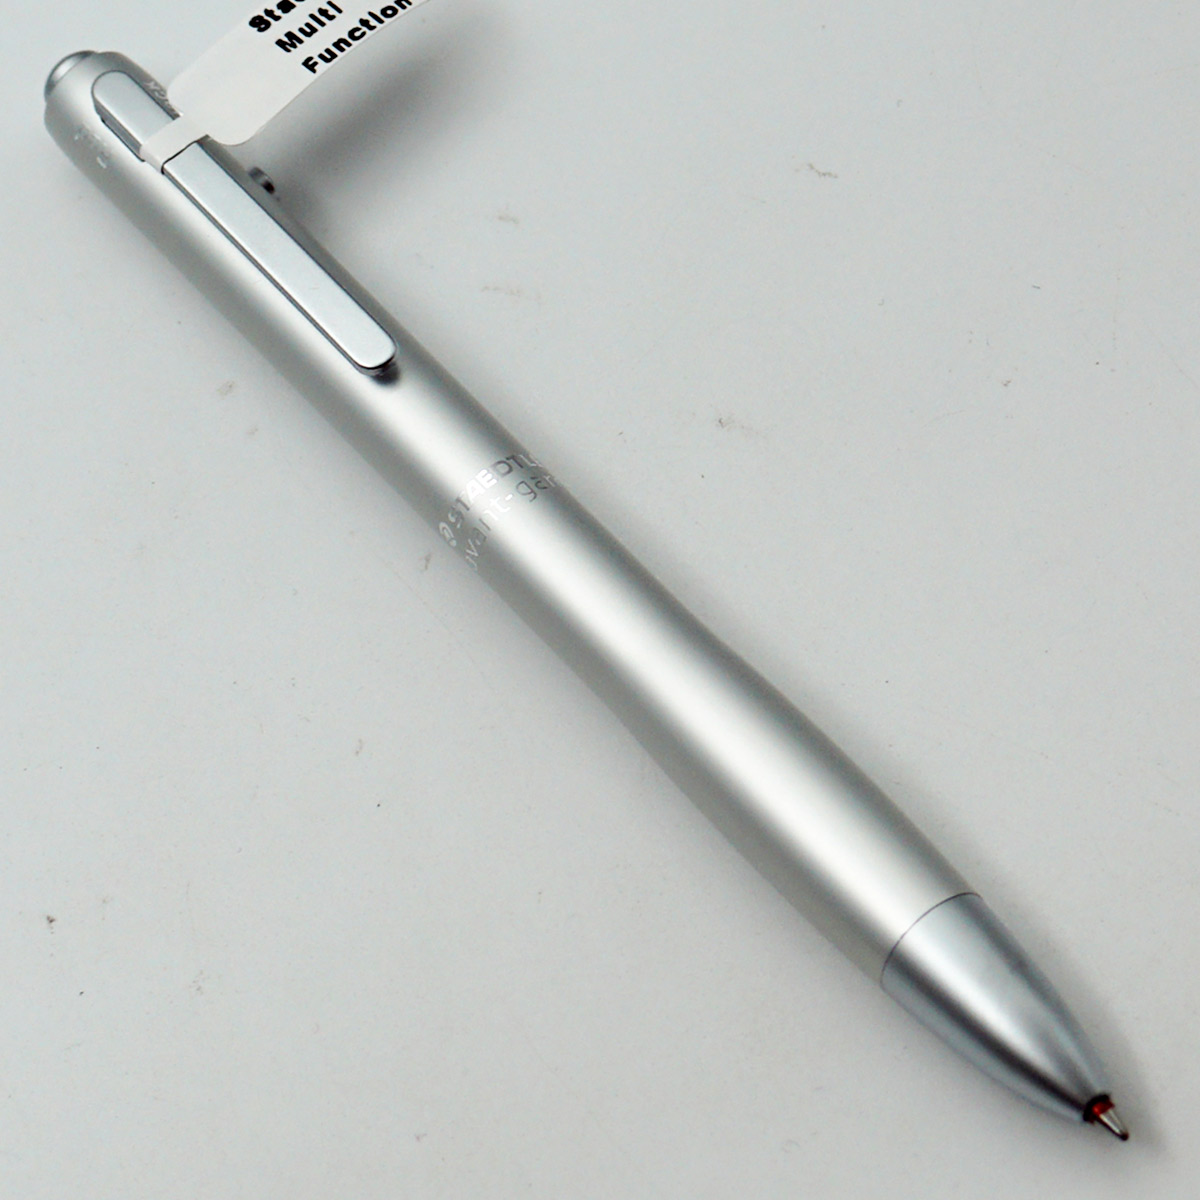 Staedtler avant garde Full Silver Color Body With Silver Clip Multi Function Pen SKU 24511